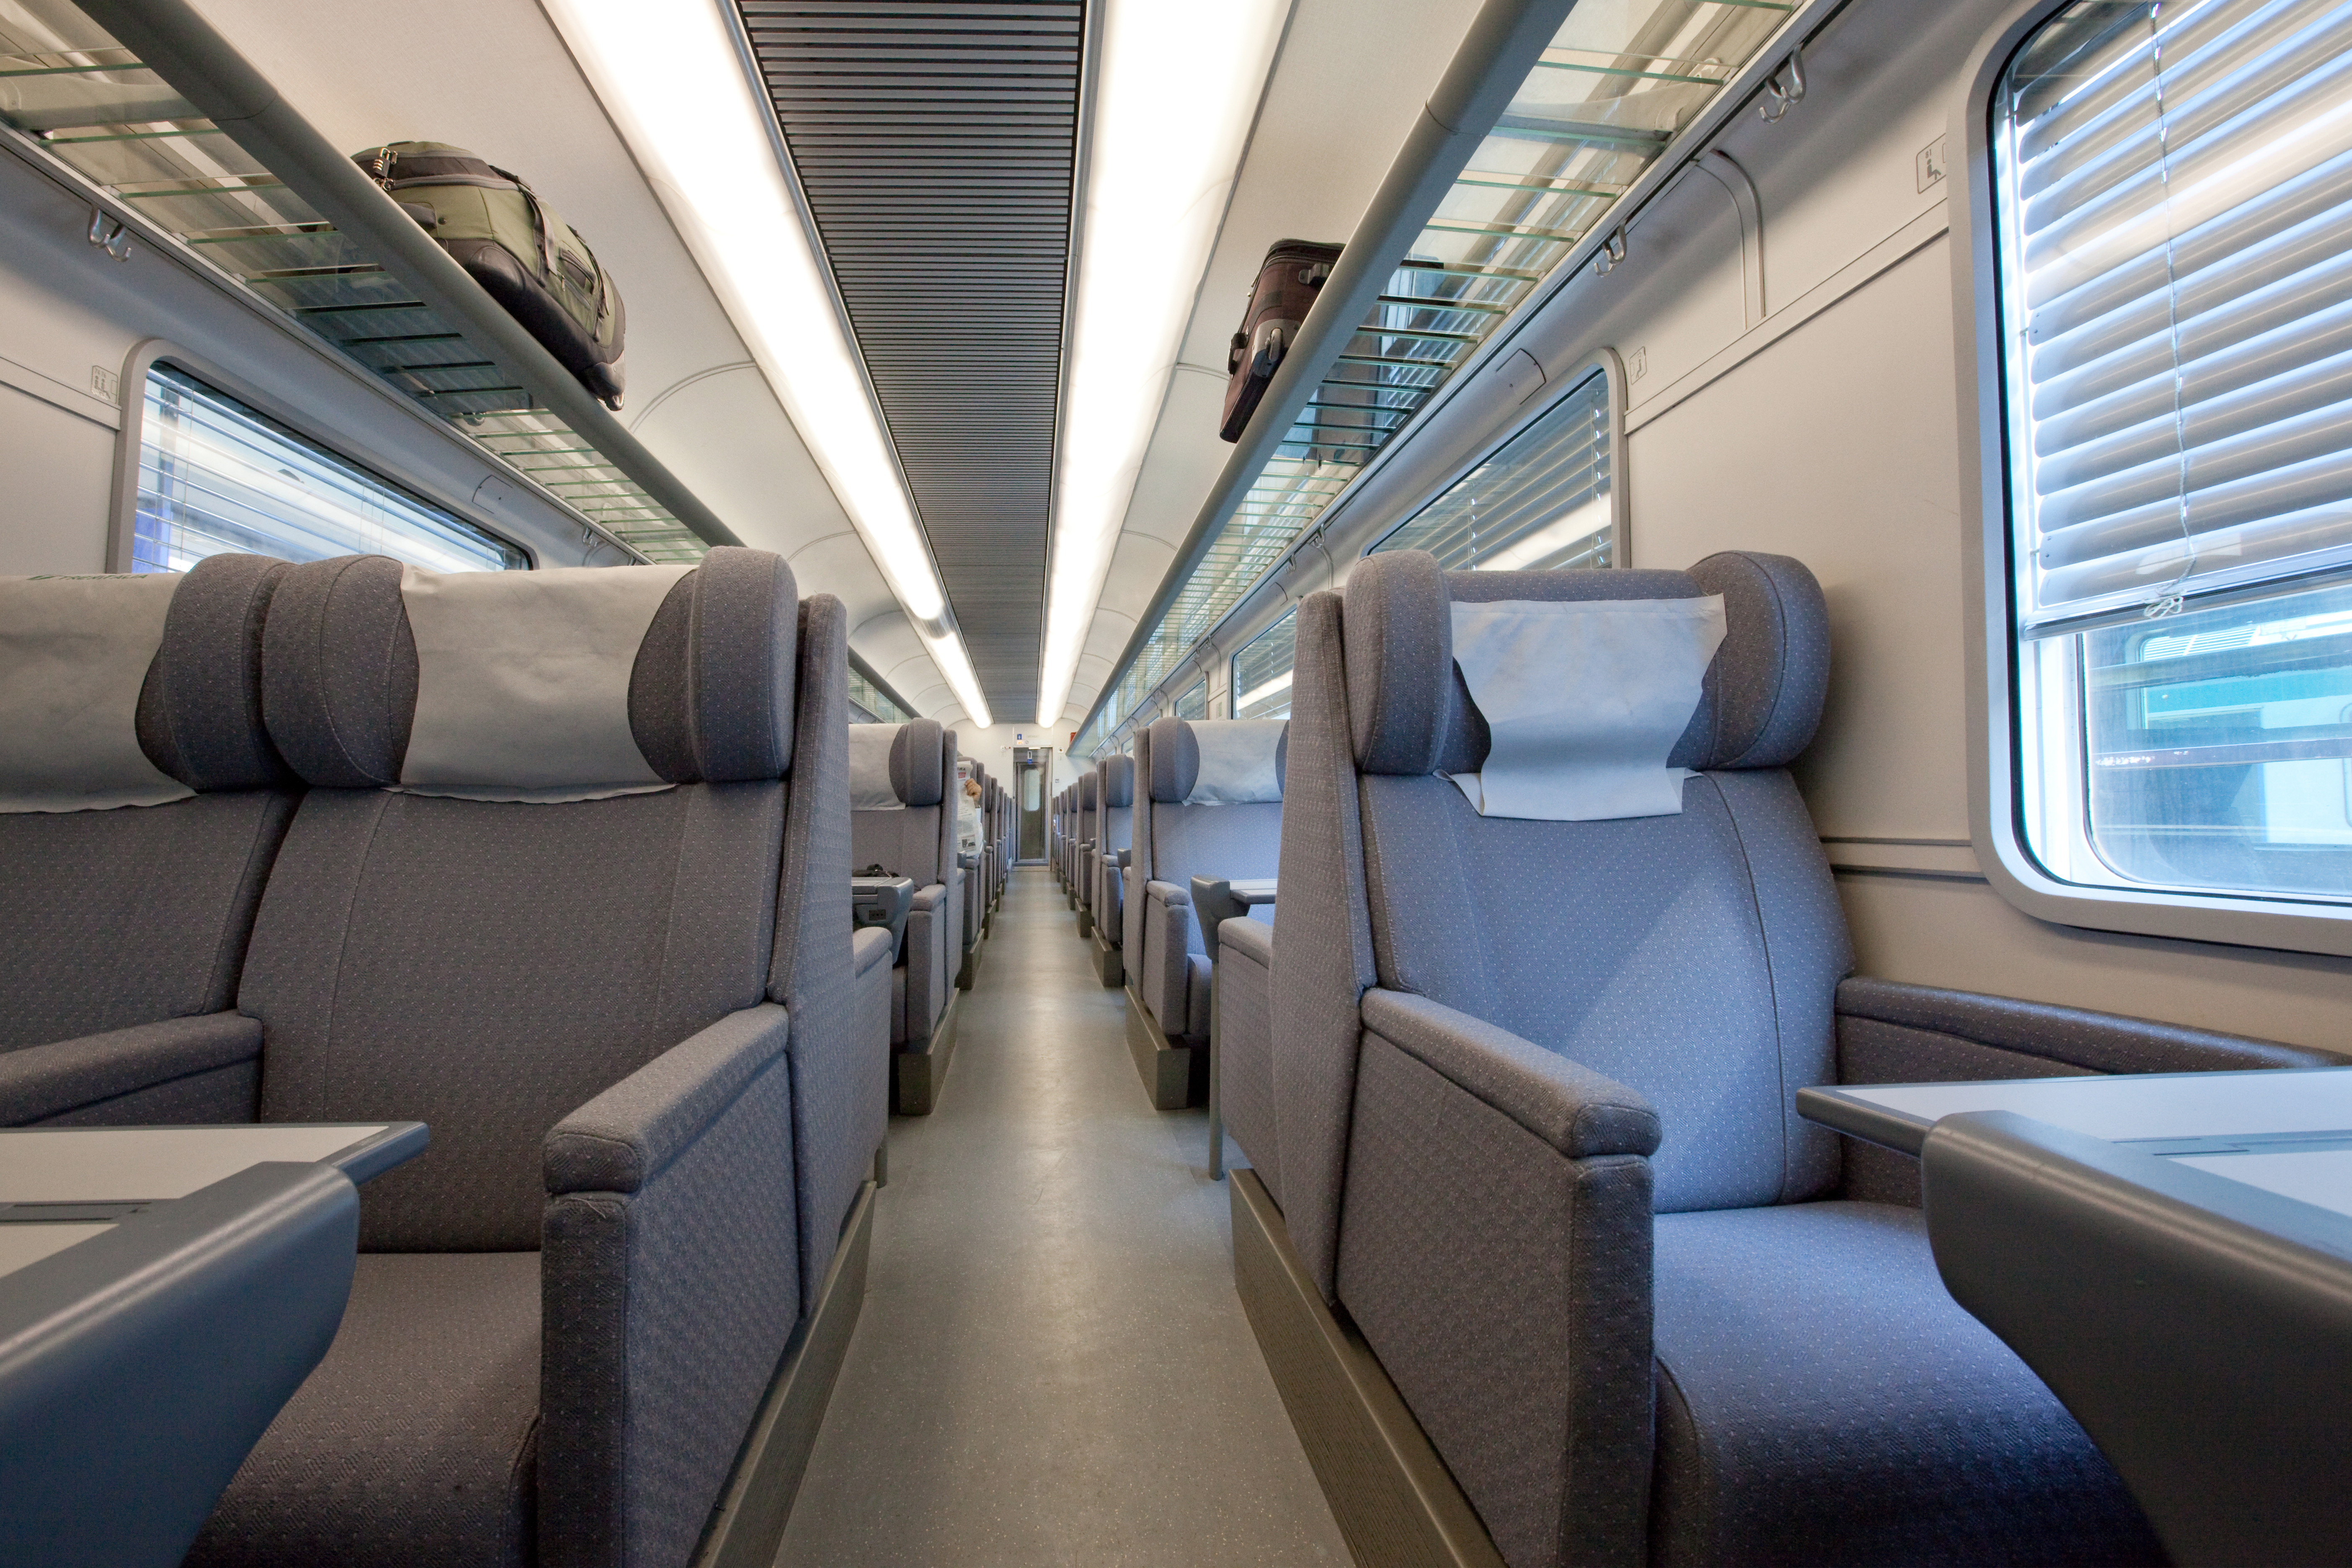 Cabina de tren de primera clase vacía | Foto: Shutterstock